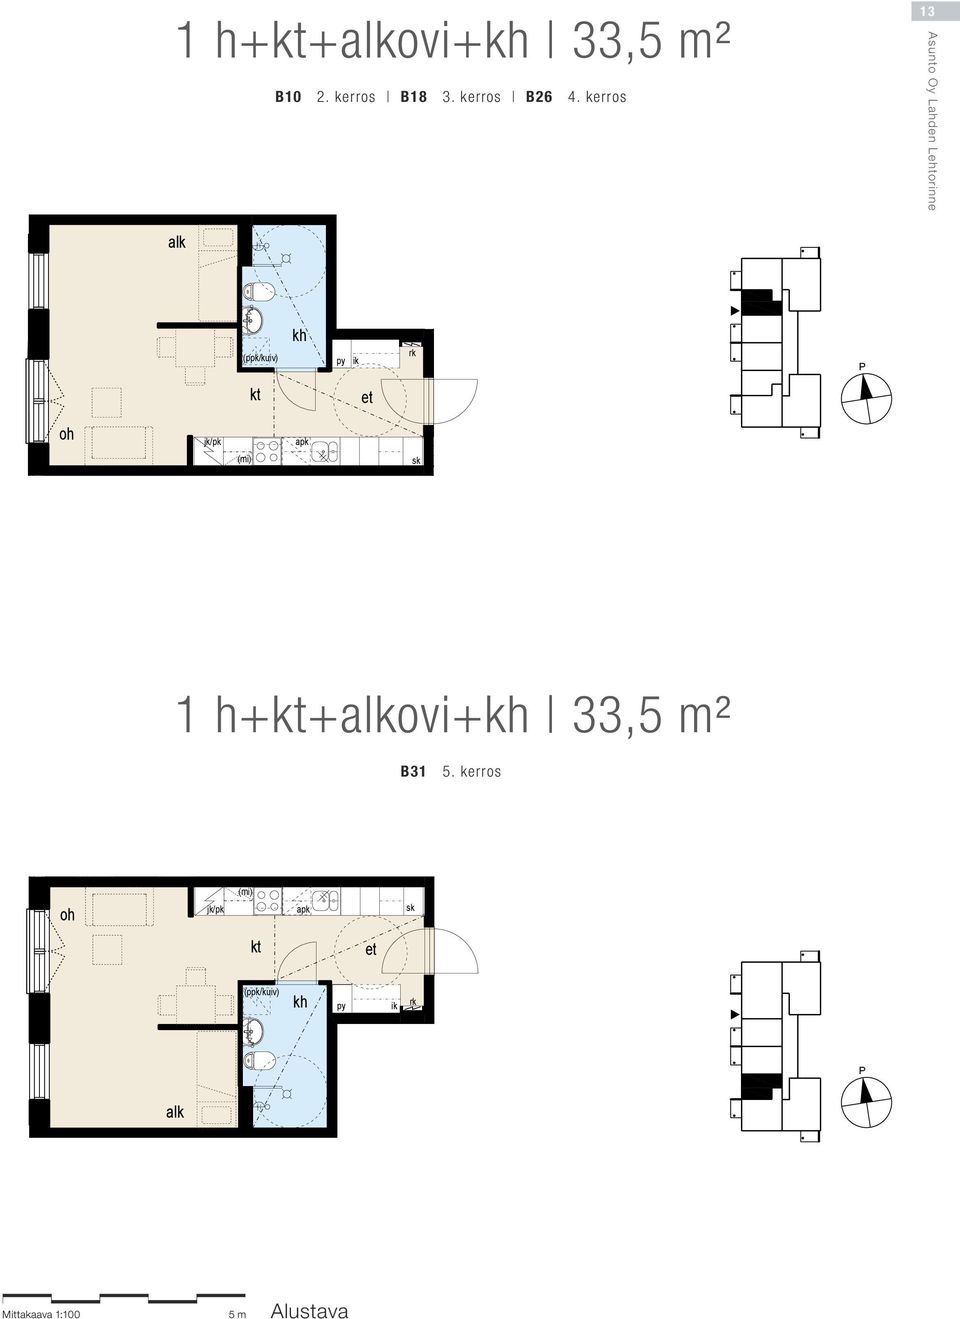 i j/p Raennuen yityitainen uunnittelu alovi+ 33,5 m² 5.r al j/p al 1 h++alovi+ 33,5 m² i i B31 5.